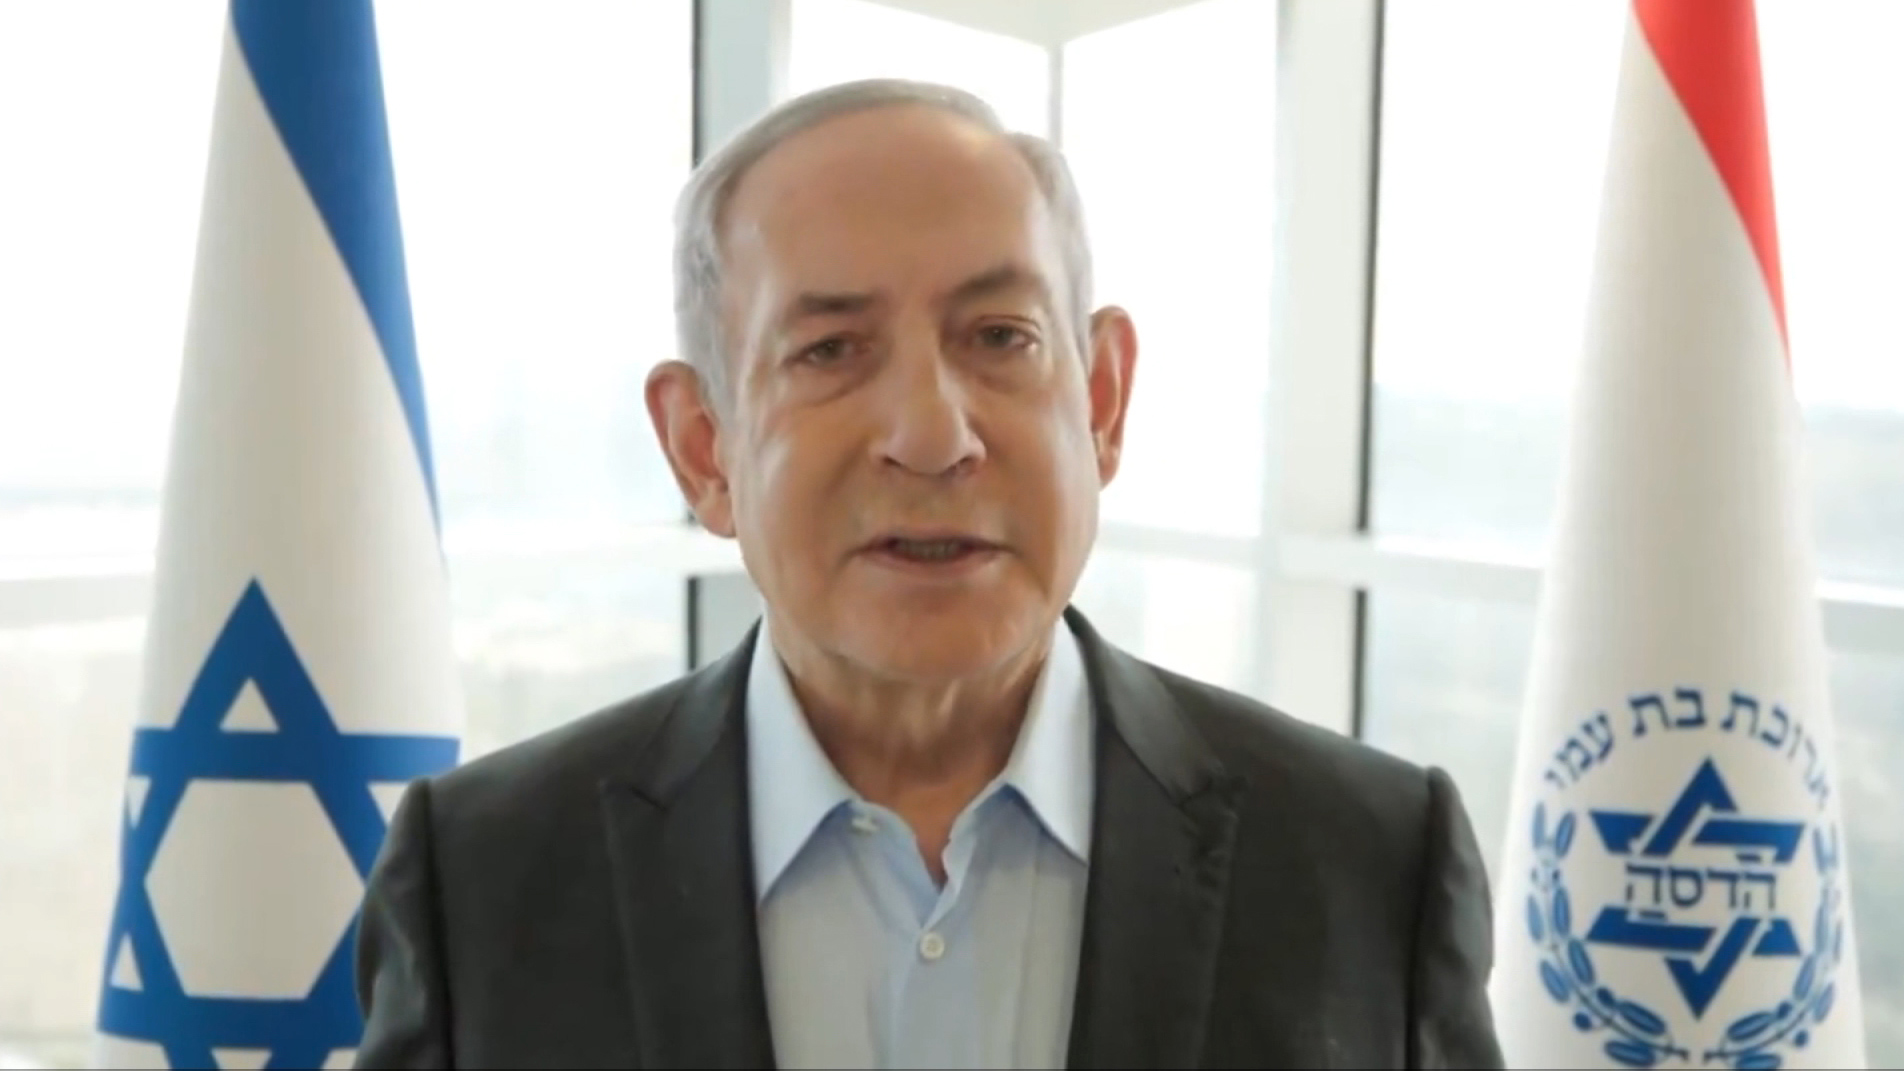 Israeli Prime Minister Benjamin Netanyahu says that Israeli forces “unintentionally struck innocent people in the Gaza Strip.”